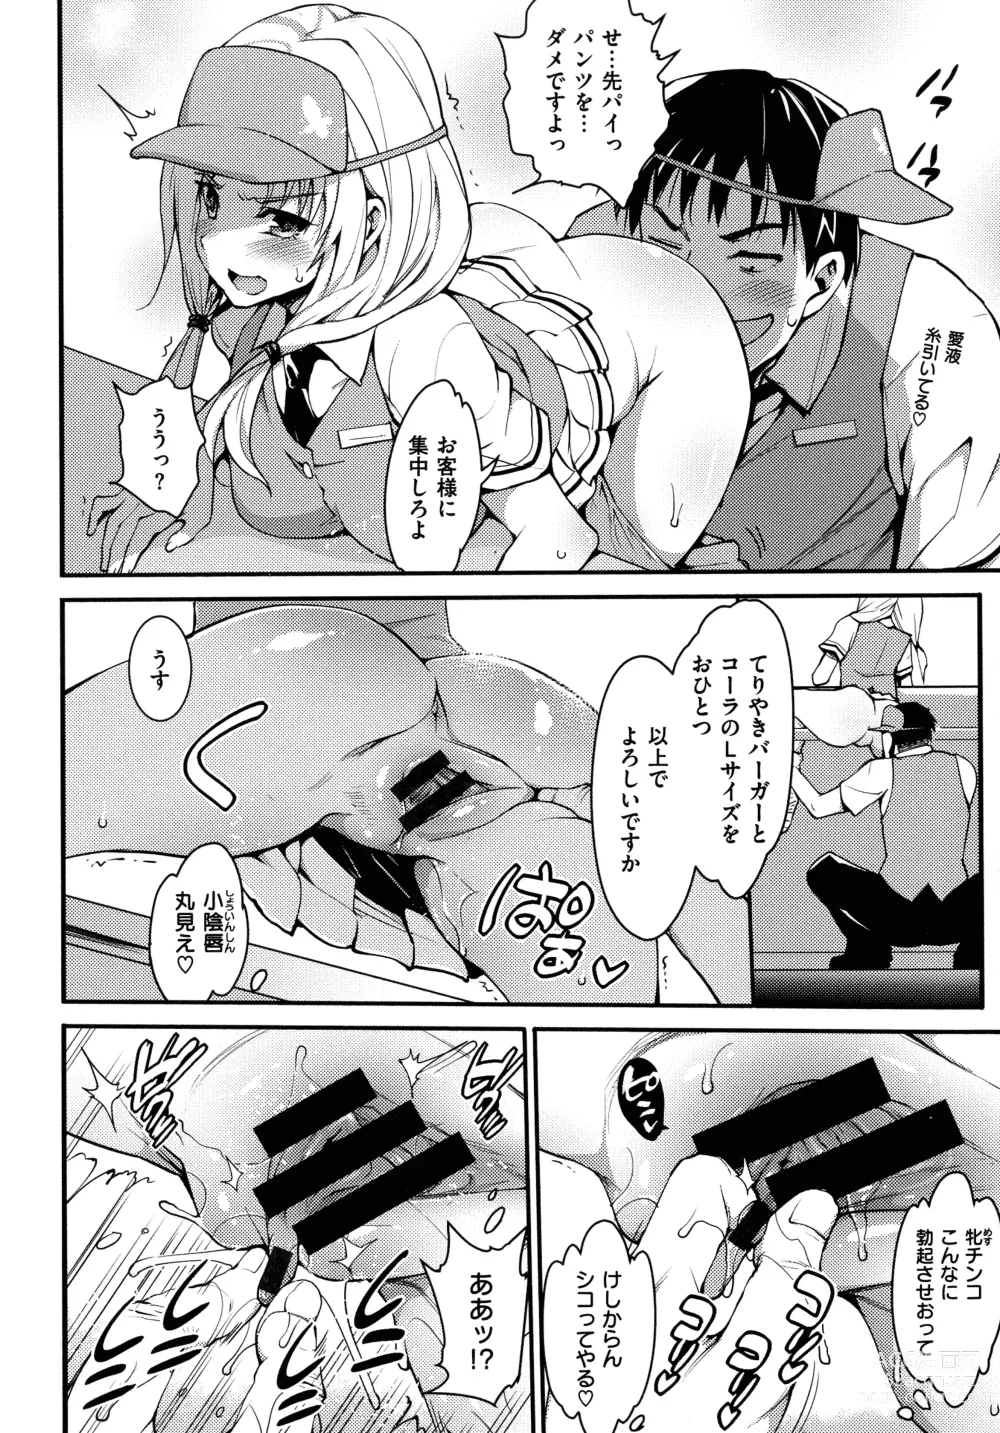 Page 203 of manga Muriyari Hametai